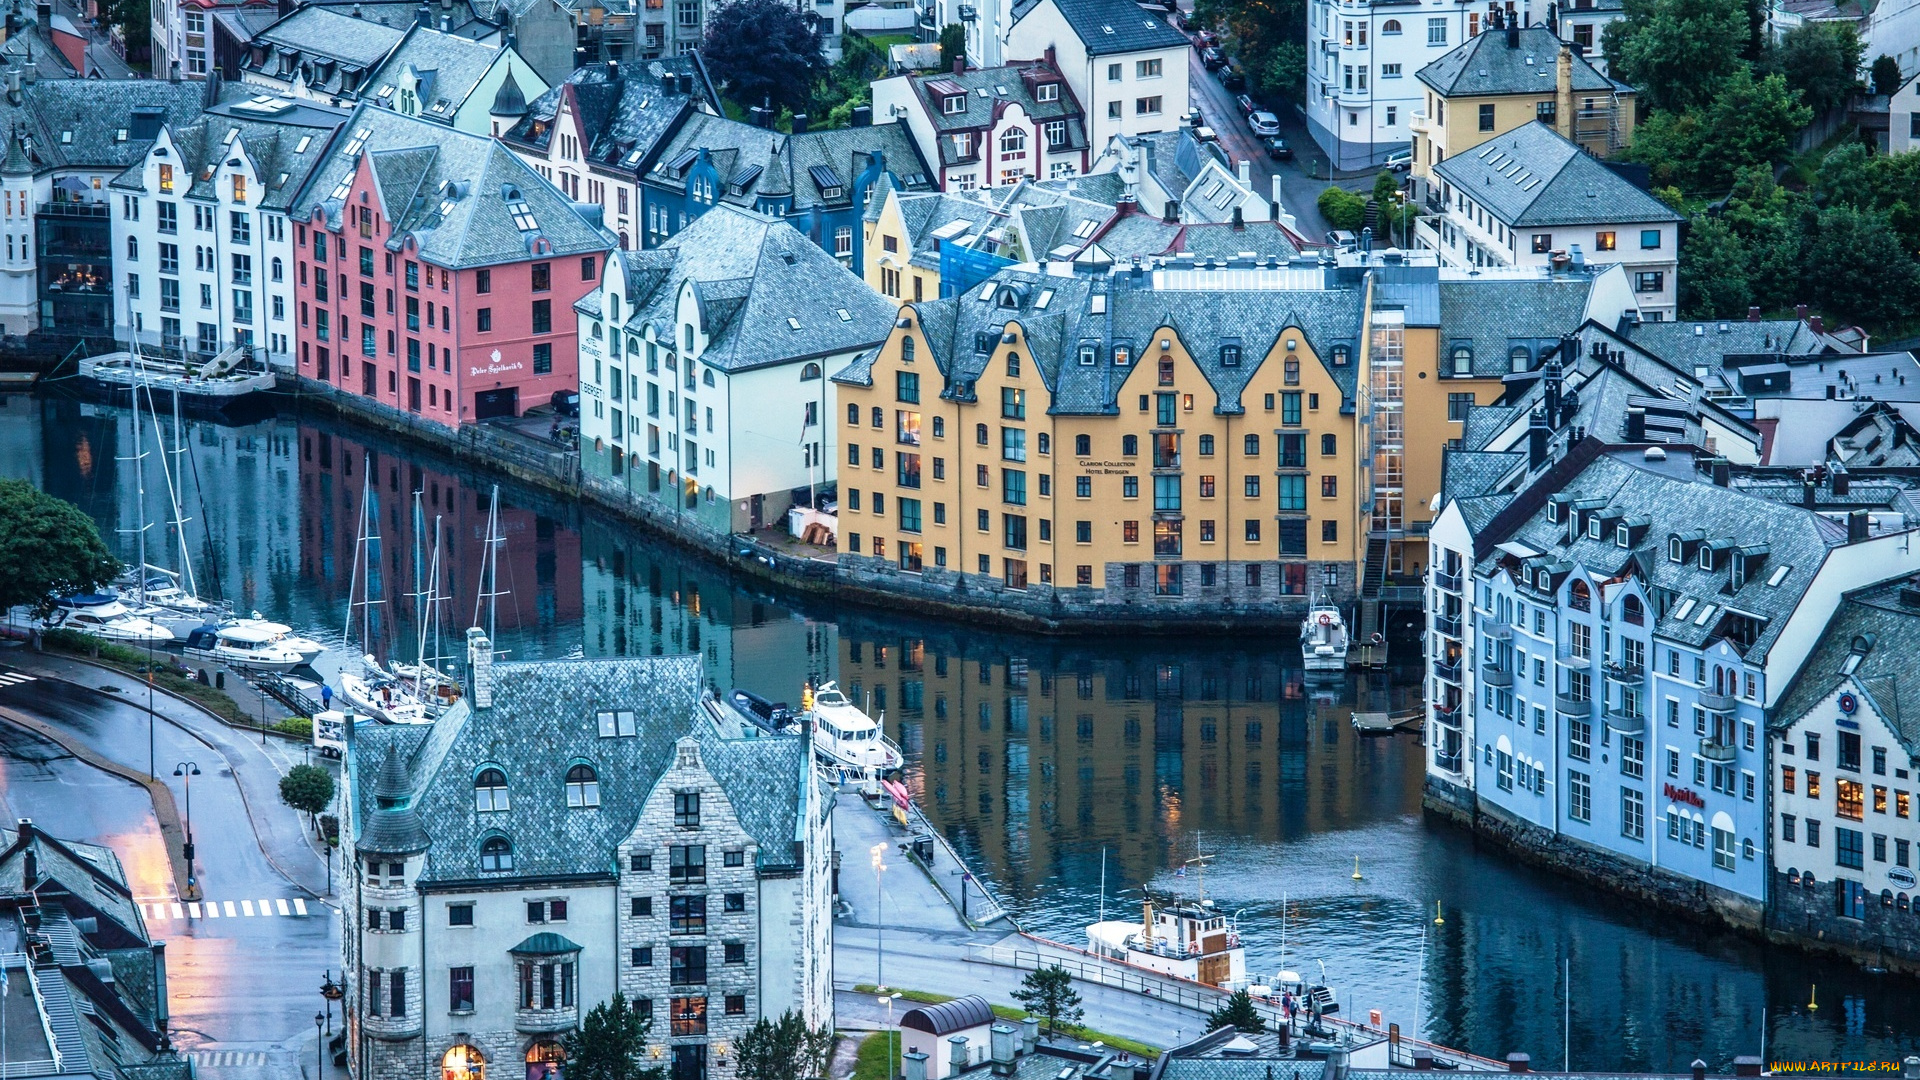 города, олесунн, , норвегия, яхты, здания, дома, каналы